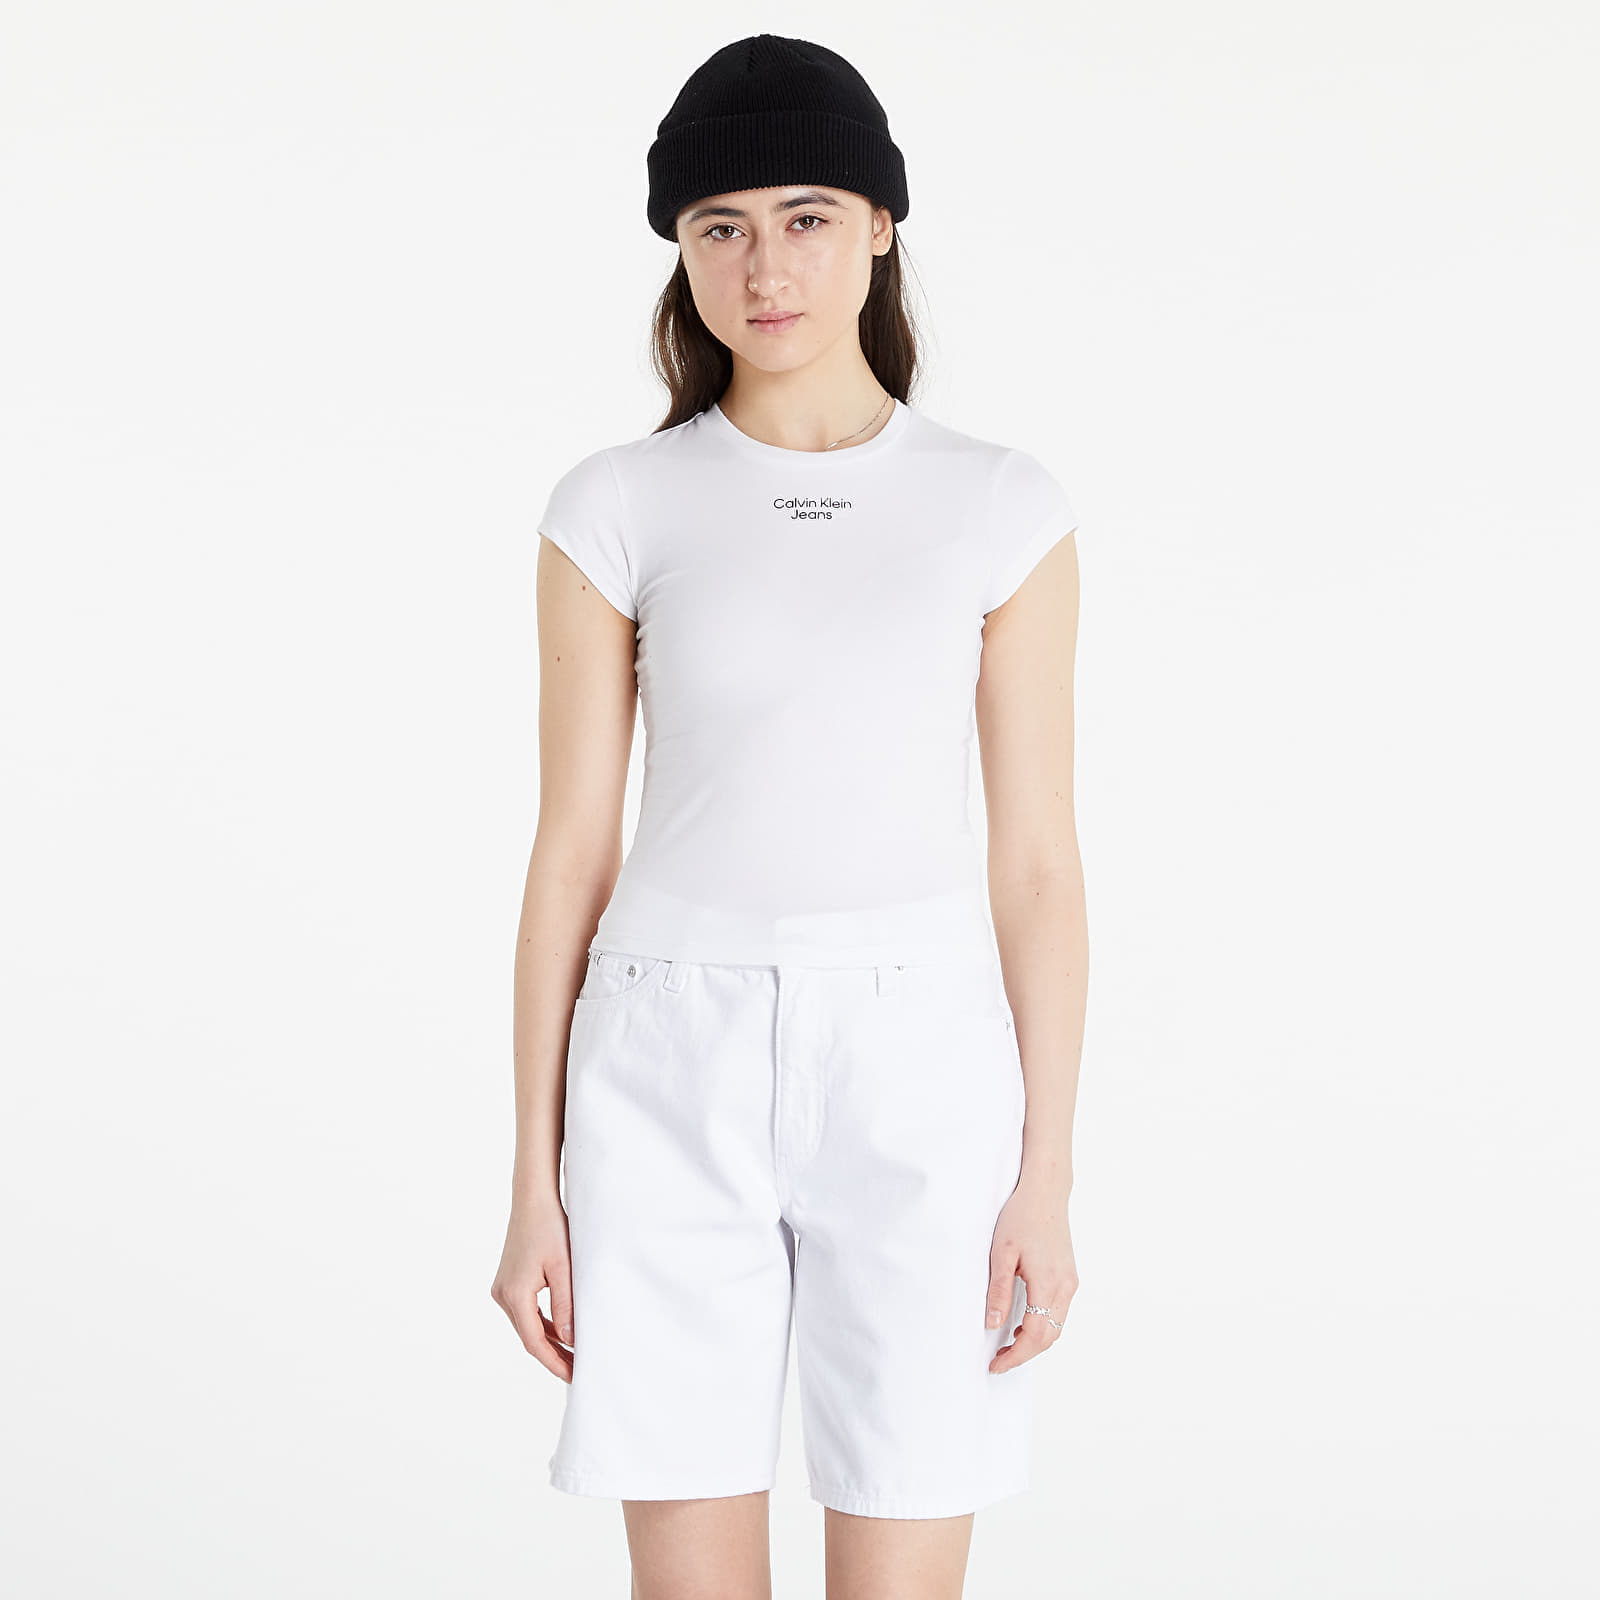 Tee Tight CALVIN | T-shirts Klein KLEIN Calvin JEANS Jeans Logo Bright Queens Stacked White